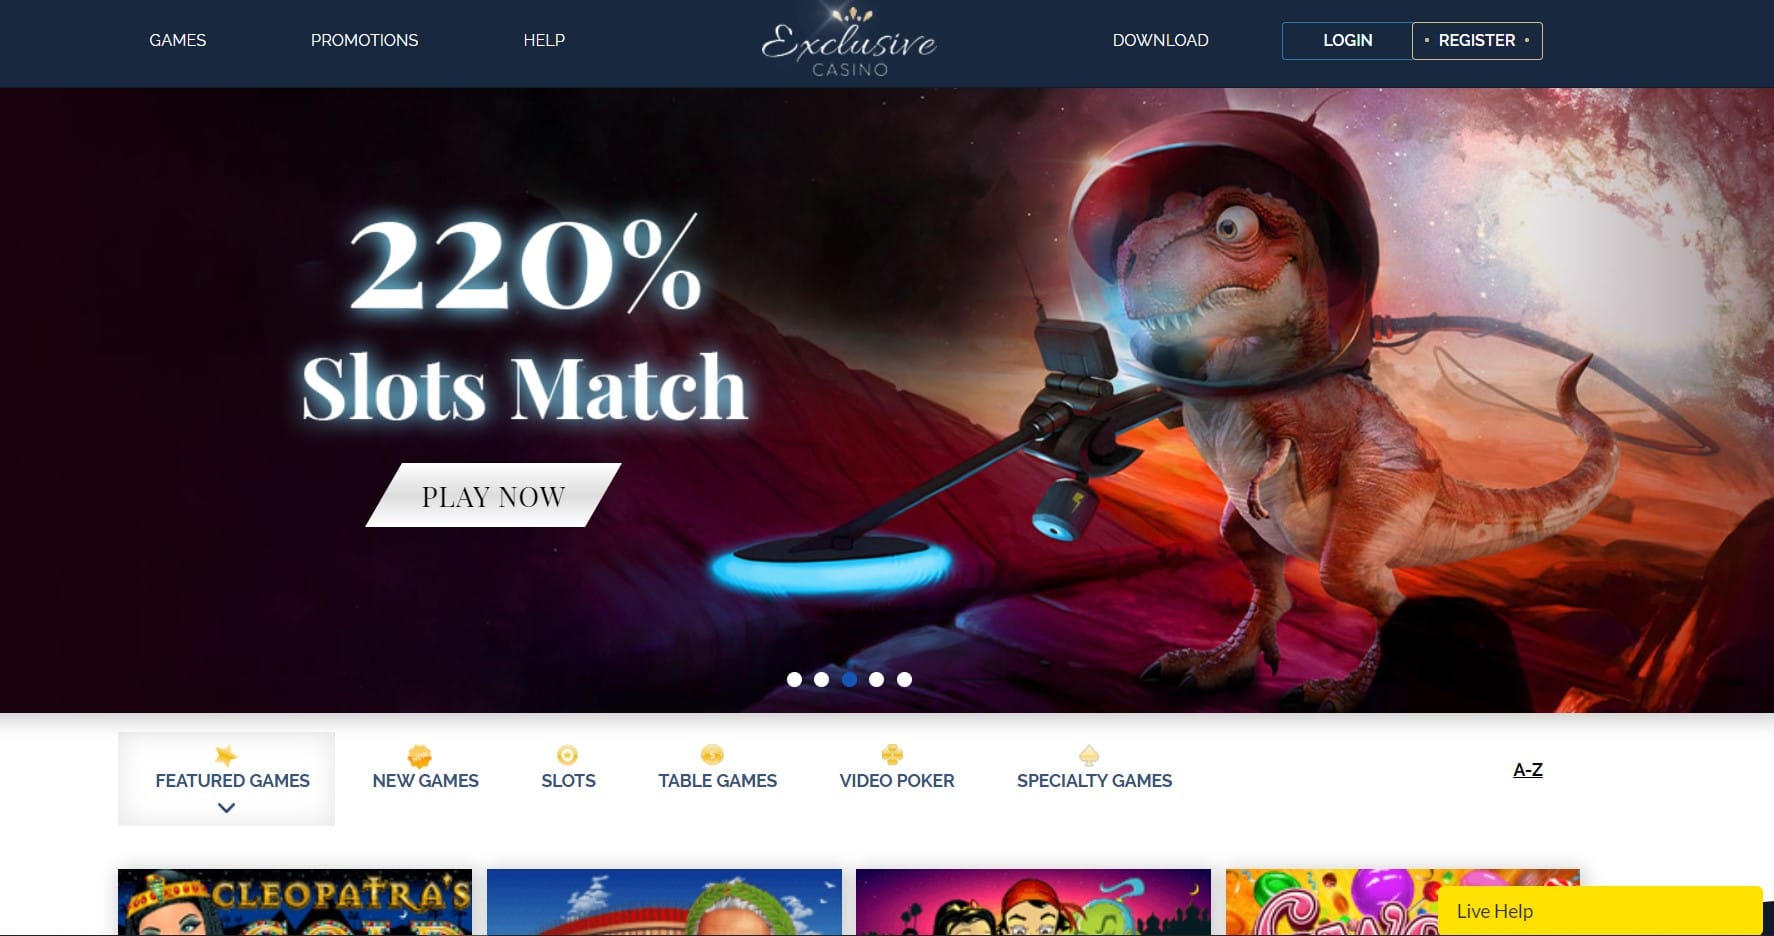 Exclusive Casino homepage